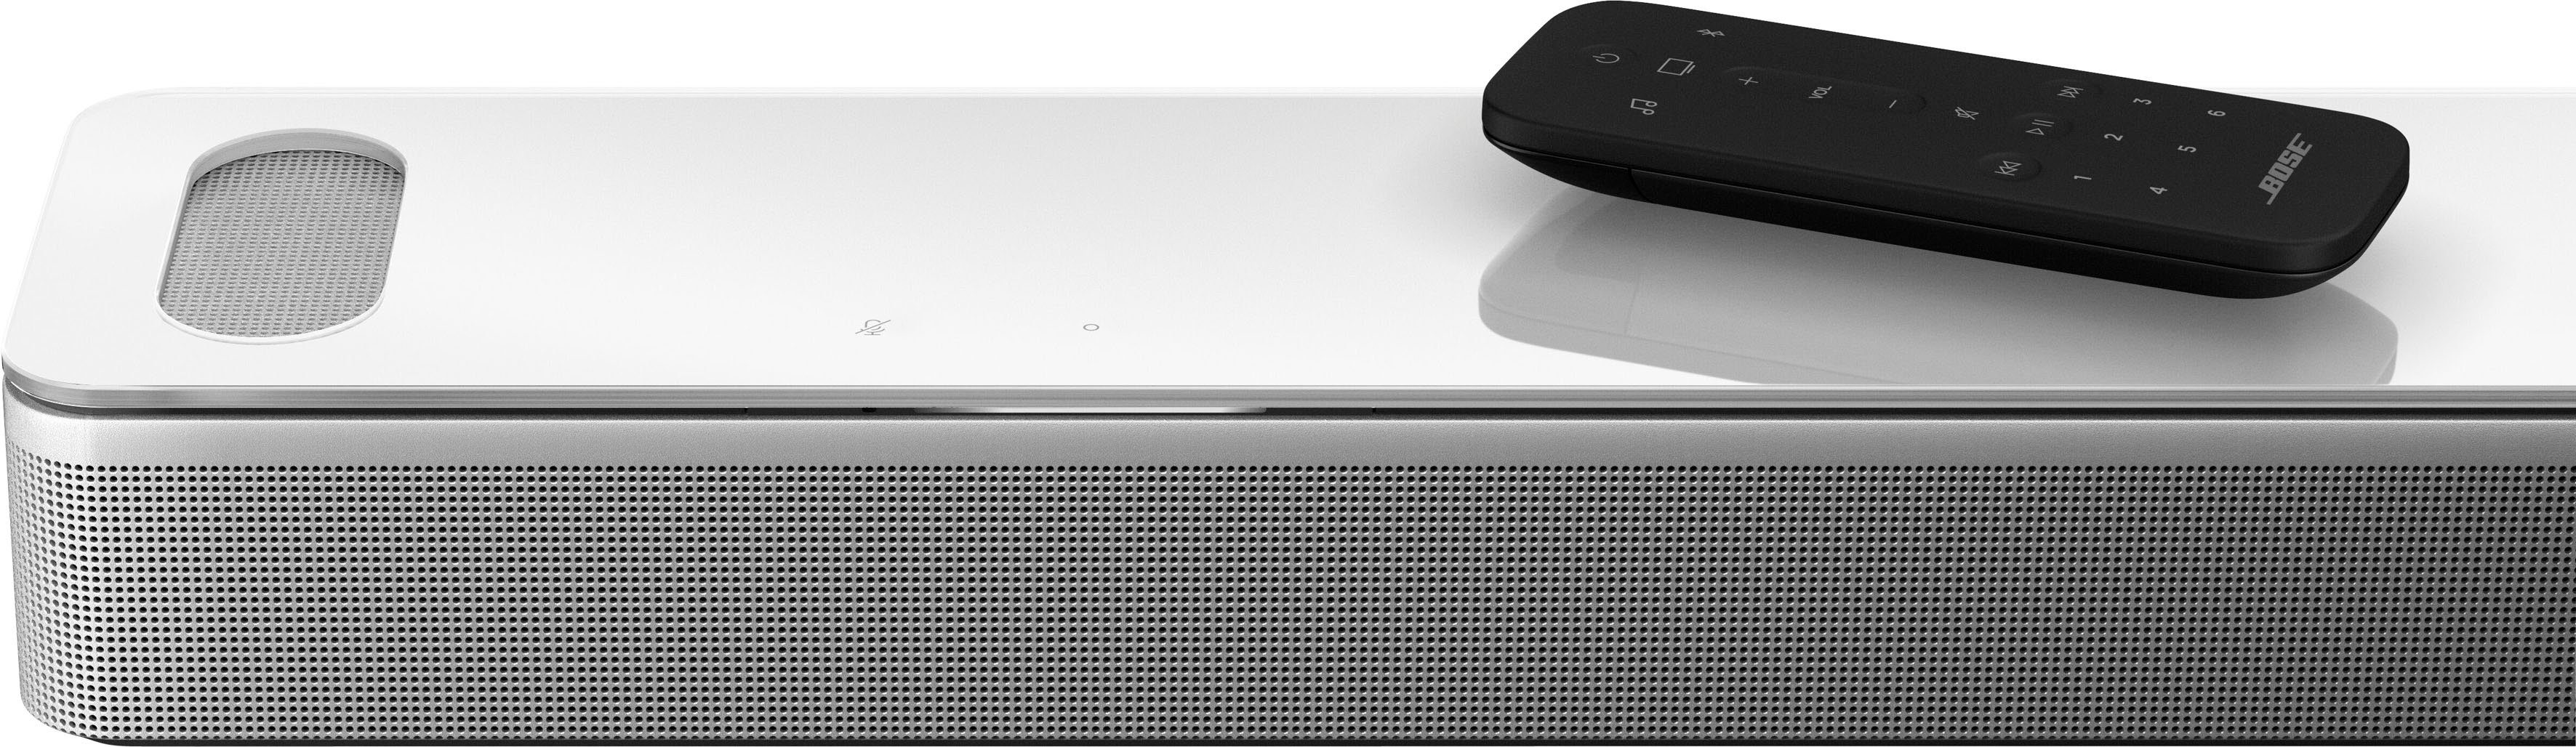 Bose Smart 700 + Assistant) Google Soundbar weiss LAN (Ethernet), Bass Module Amazon Soundbar und 900 (Bluetooth, mit Alexa